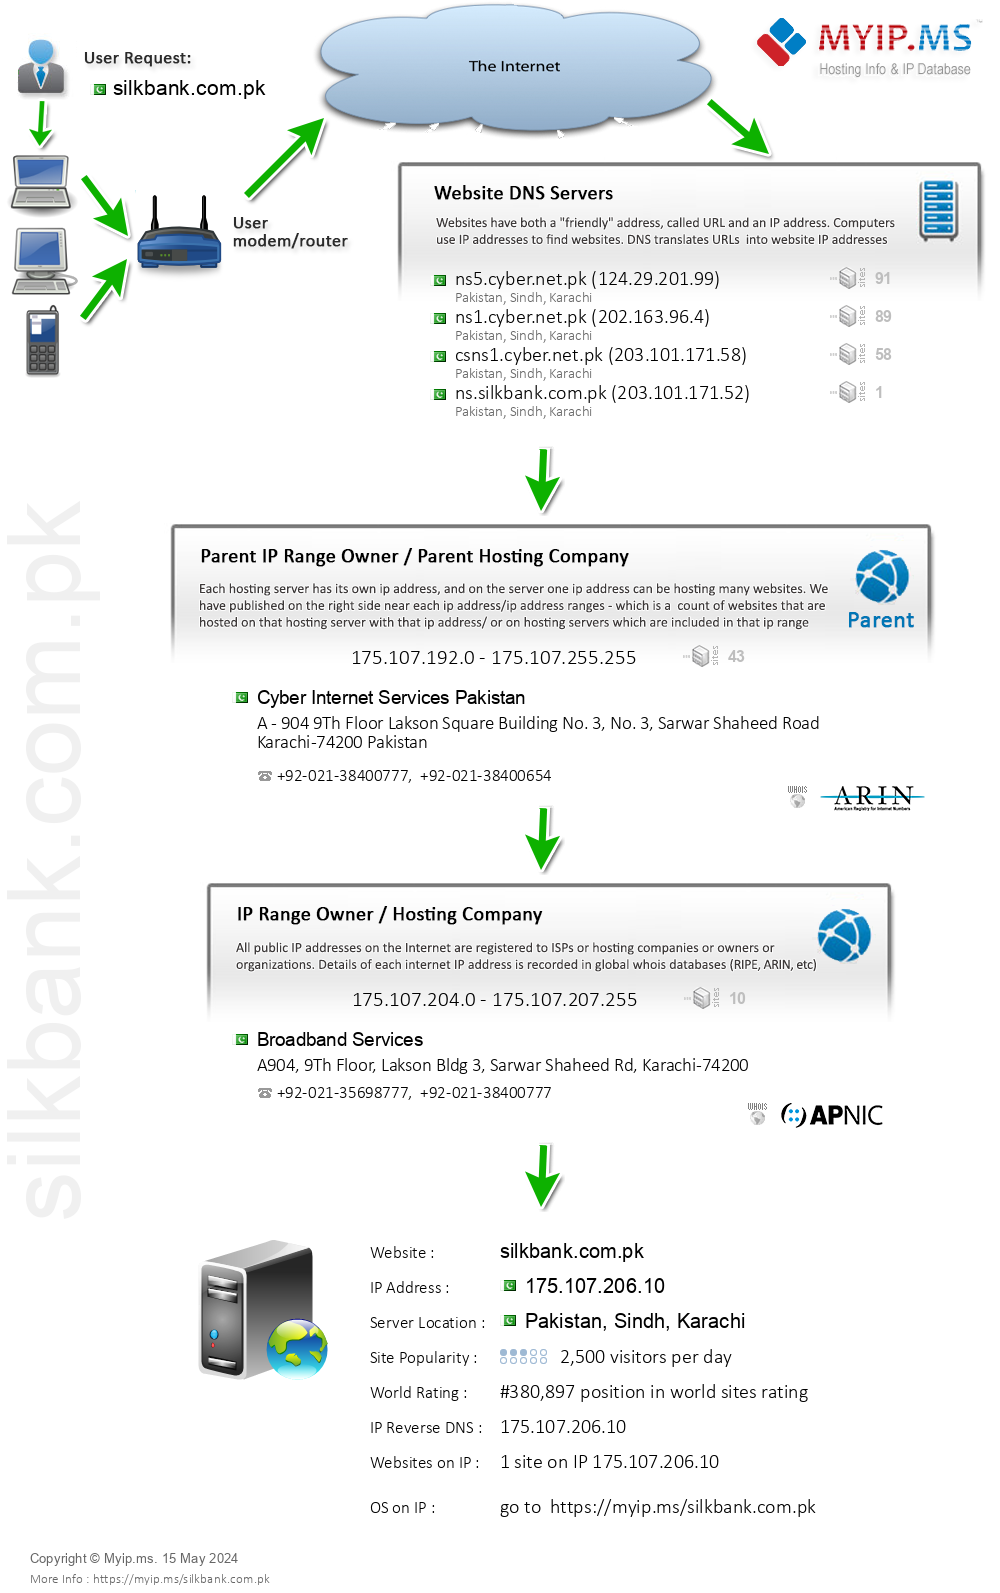 Silkbank.com.pk - Website Hosting Visual IP Diagram